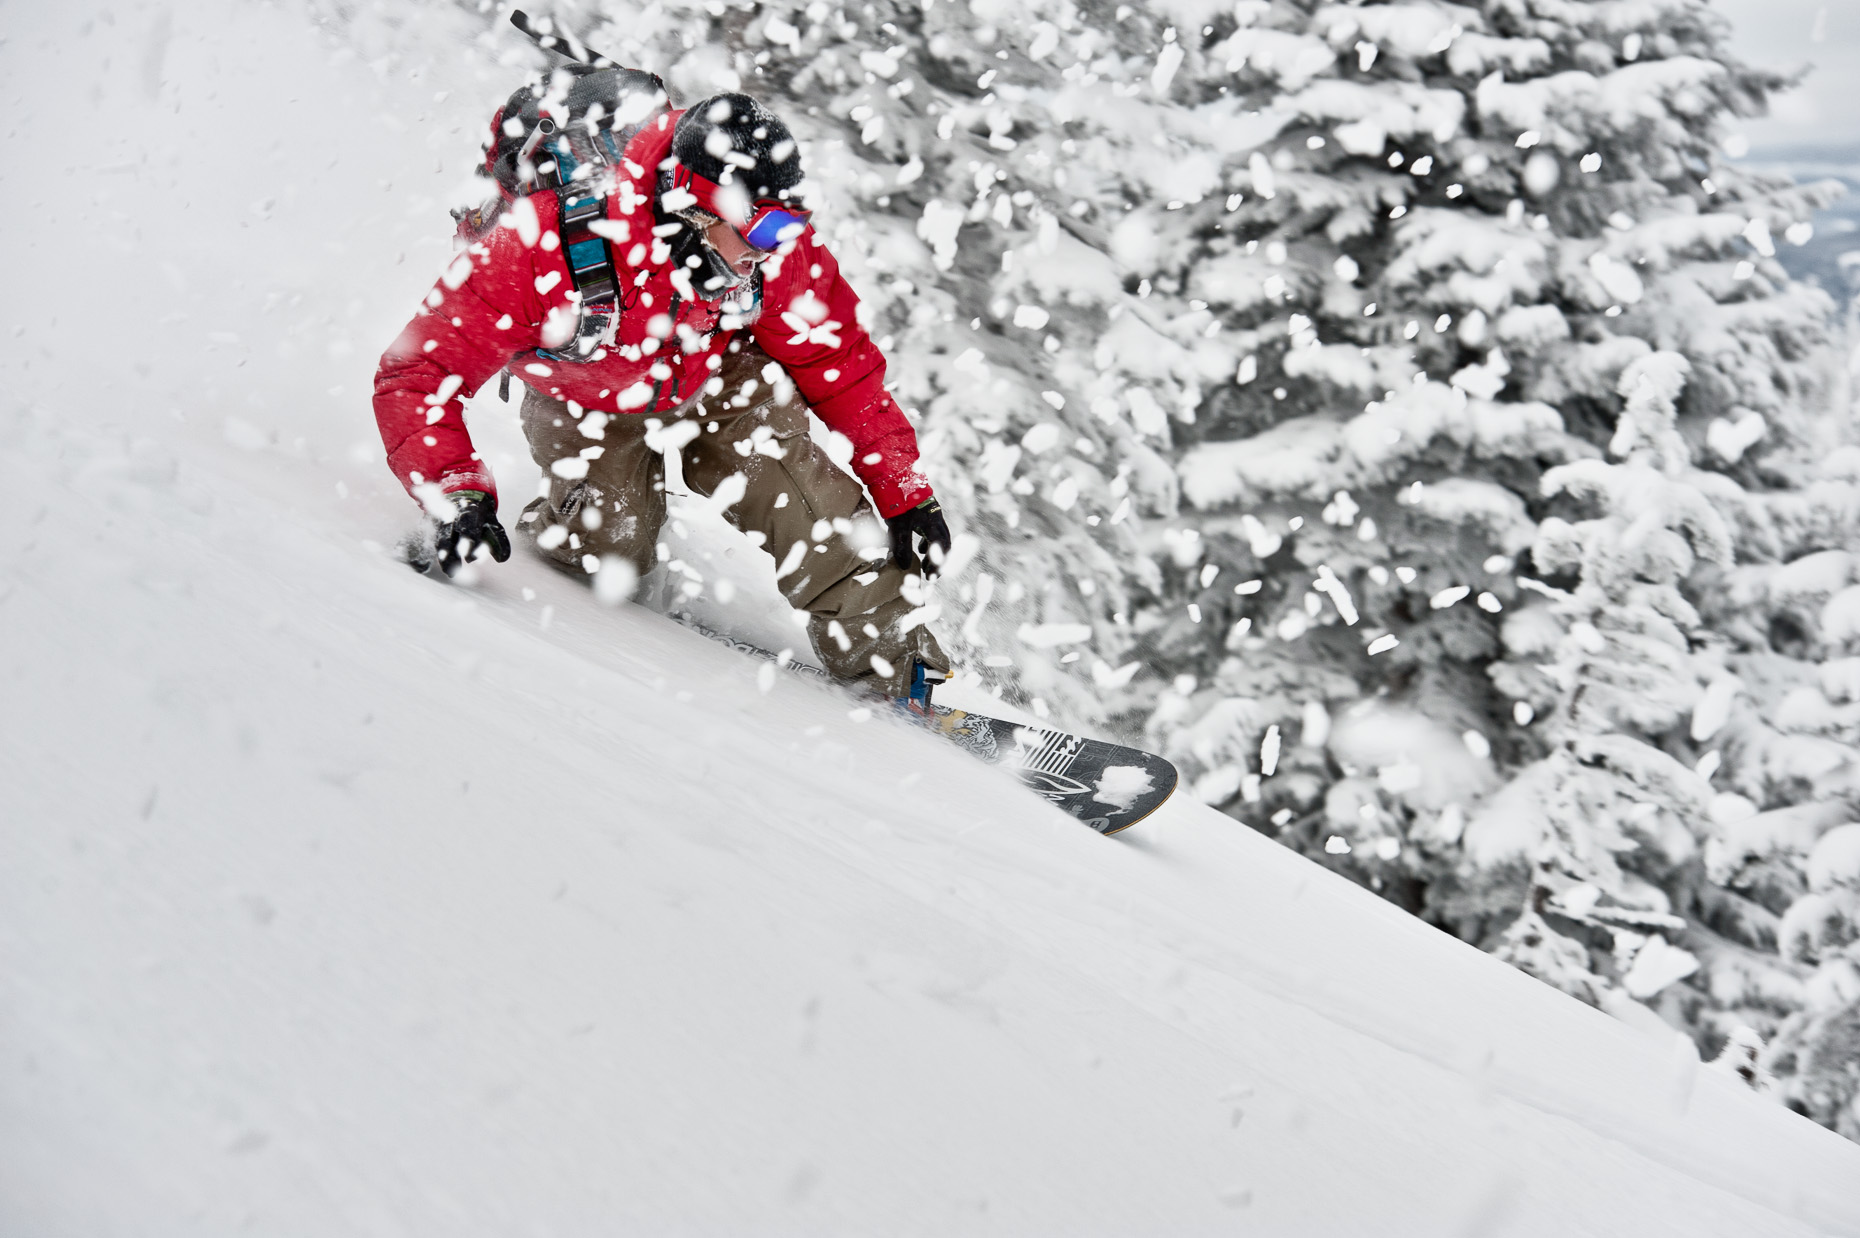 snowboarding_Shayne_Pospisil_catboarding_trip_Jan_2012_c_Brecheis-3424-2.jpg